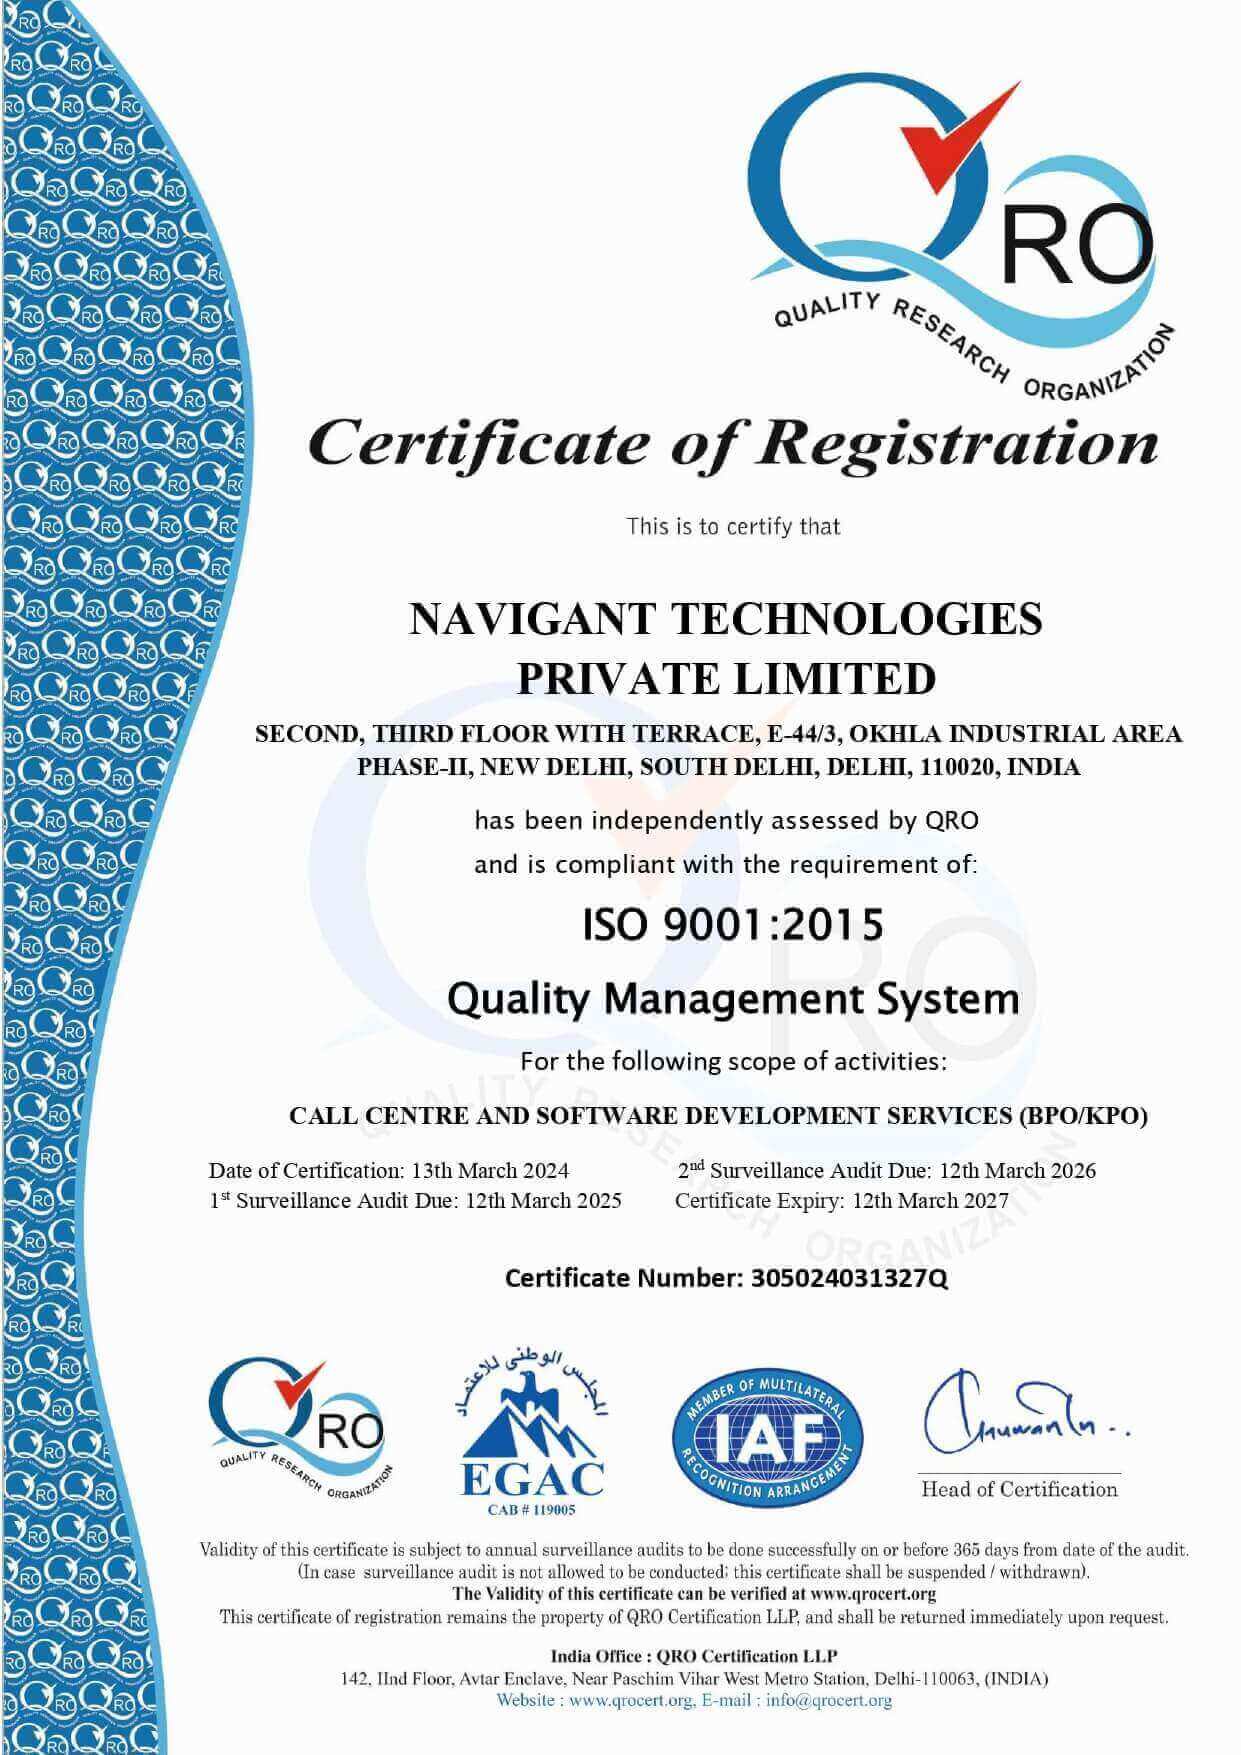 Certificate of Registration-QMS